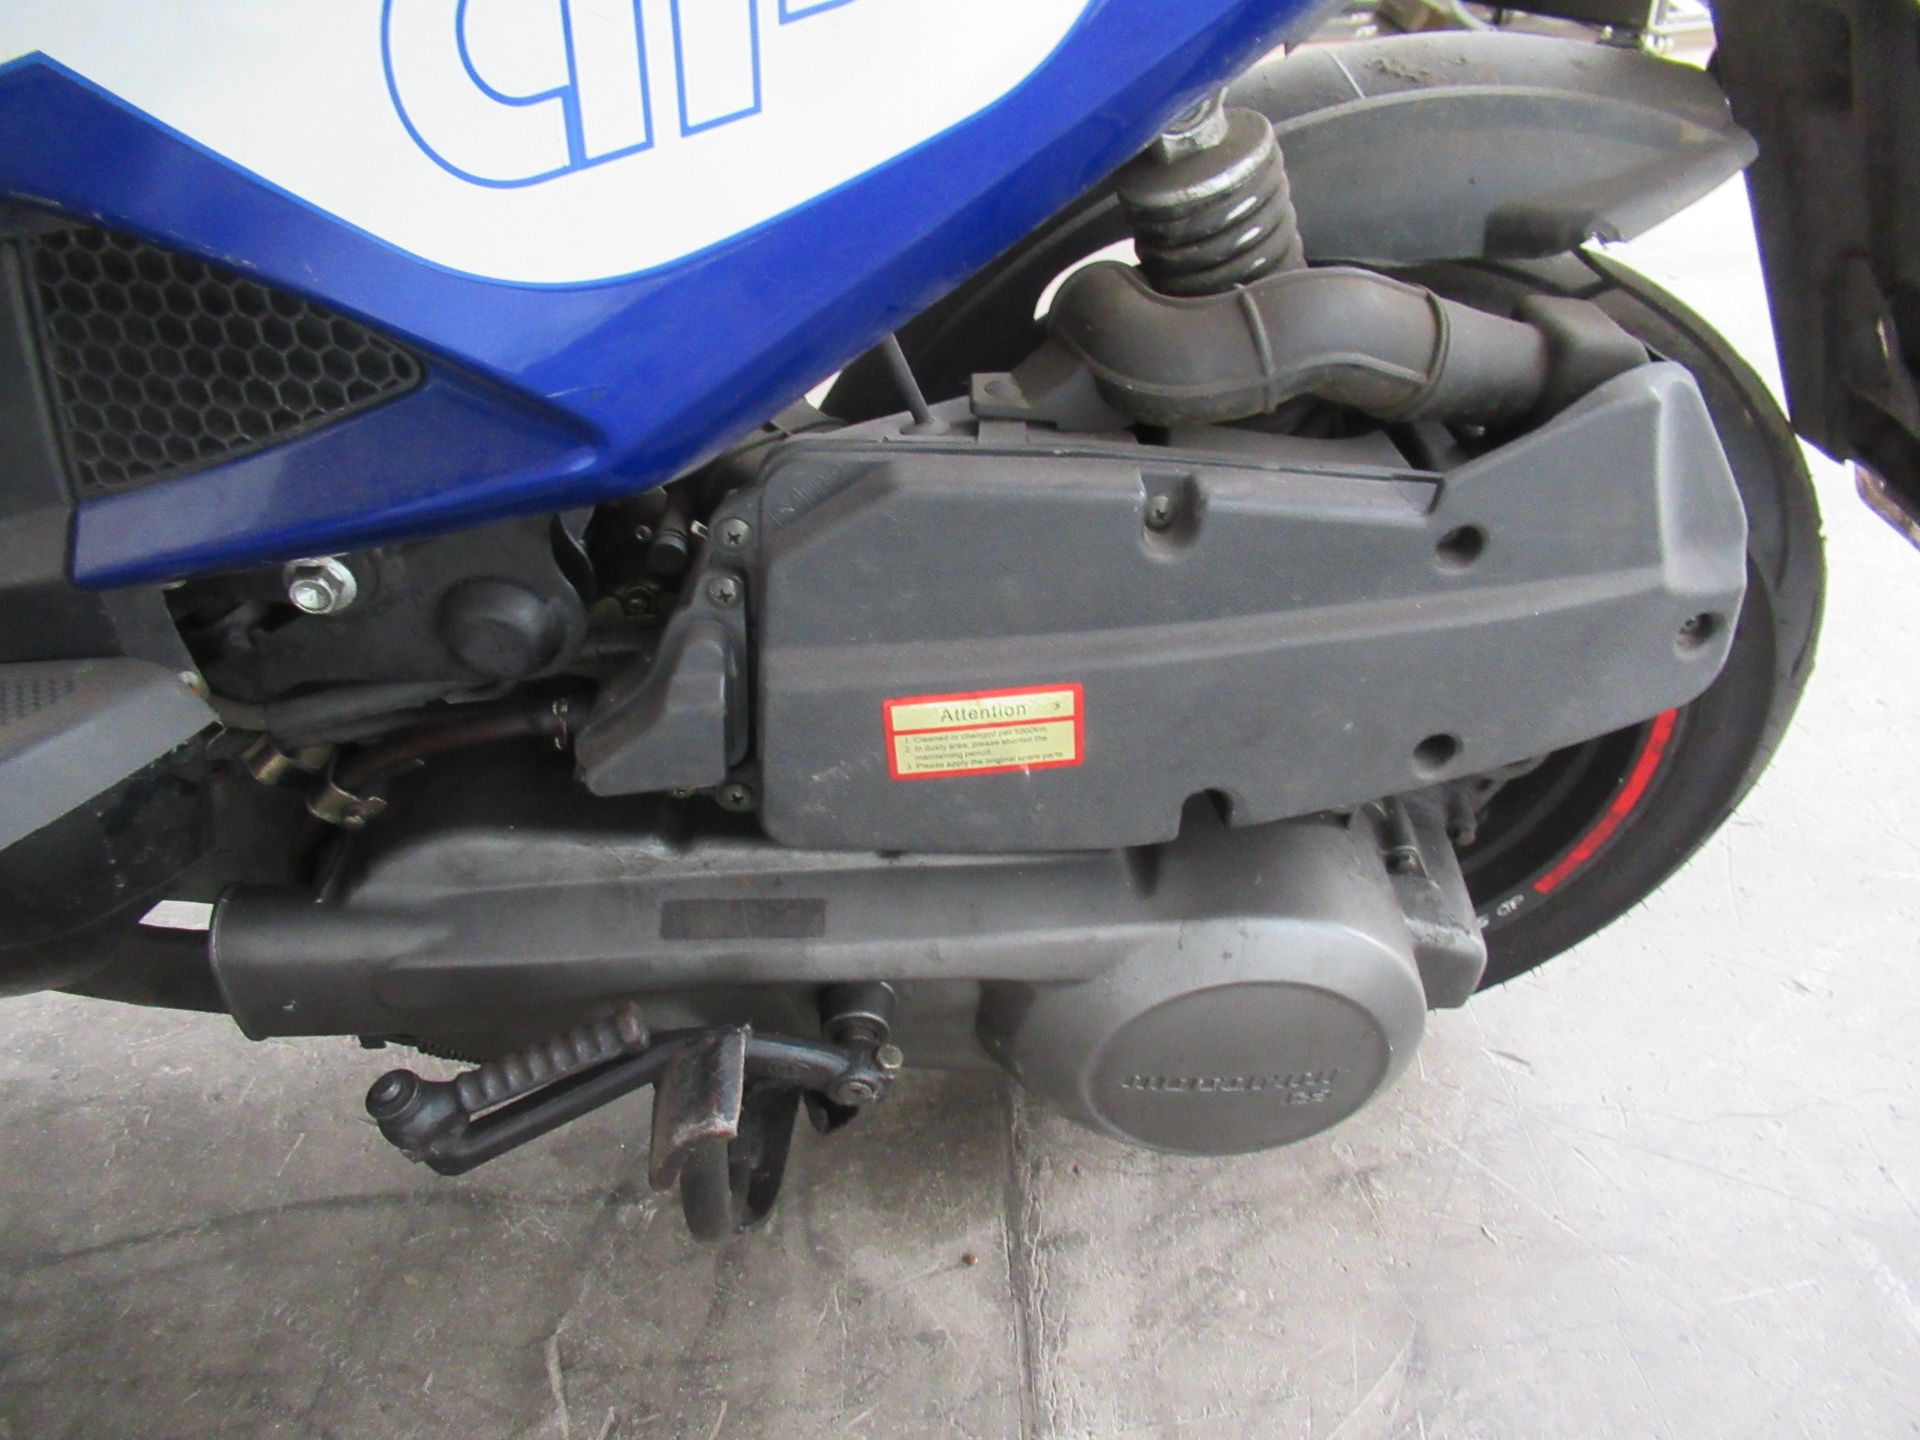 3x Motorini GP125i motorbikes - Image 6 of 30